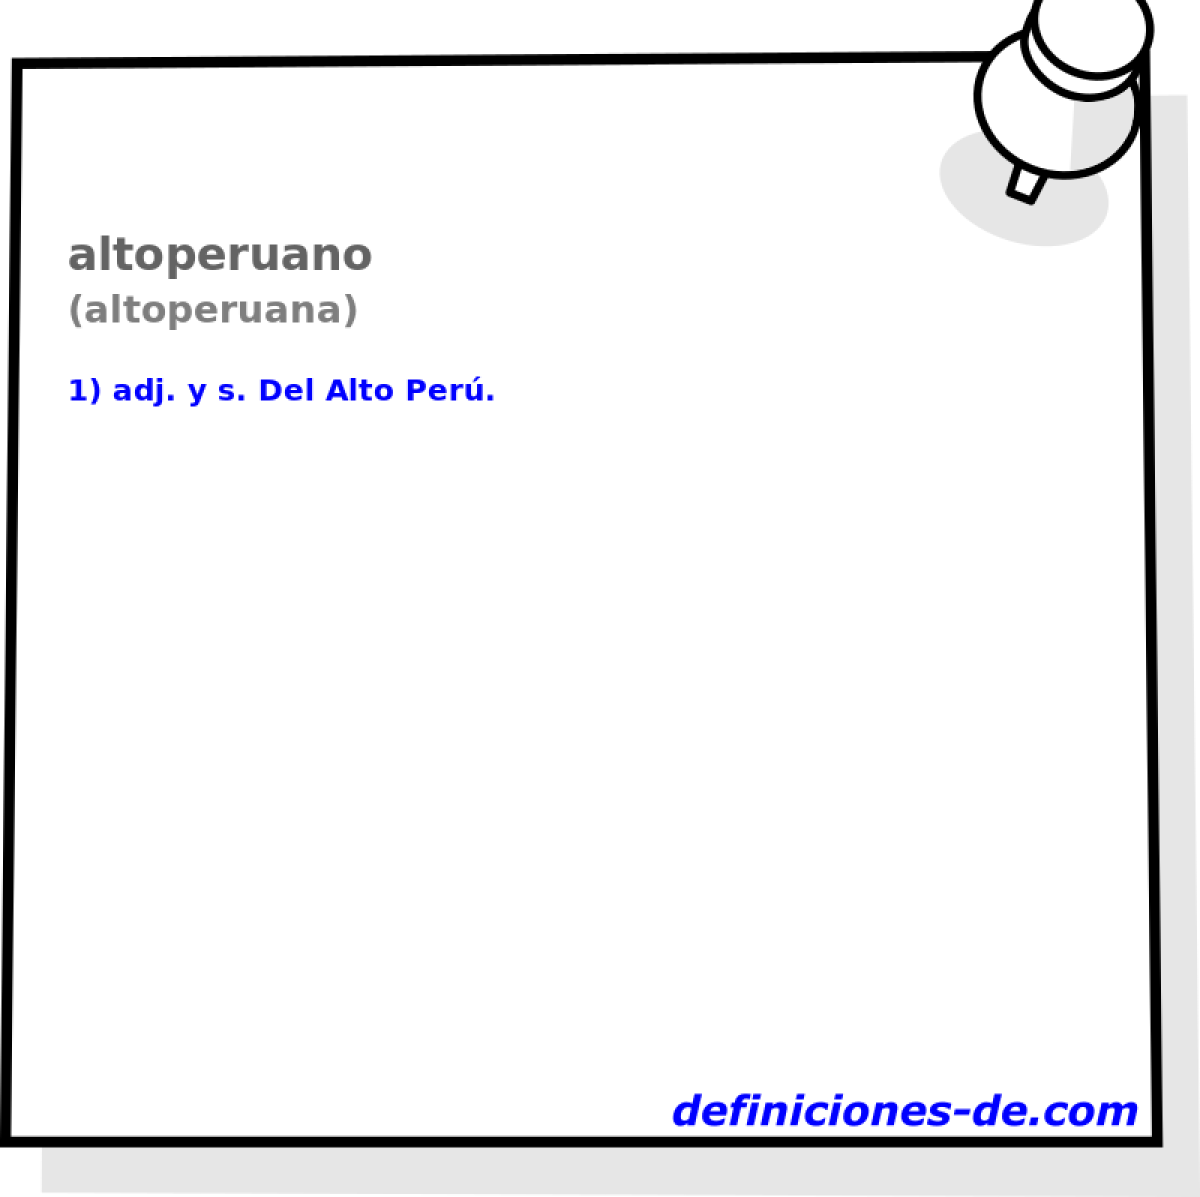 altoperuano (altoperuana)